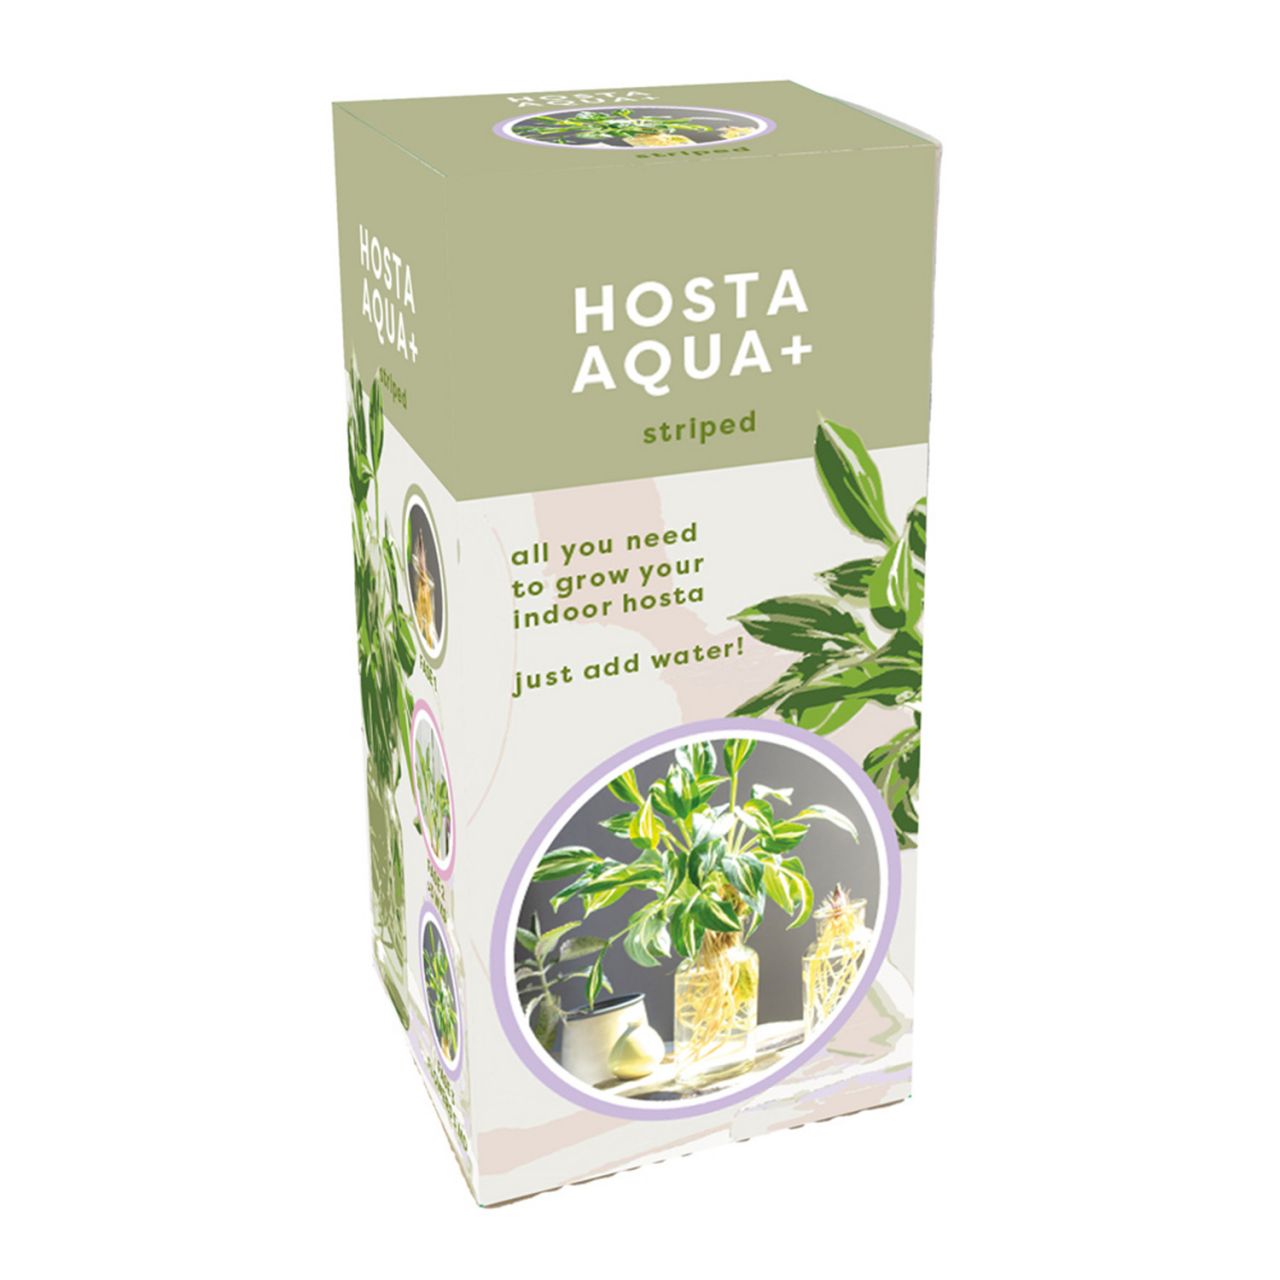 Kategorie <b>Stauden </b> - Gestreifte Hosta im Glas - Hosta Aqua + Striped - with glass